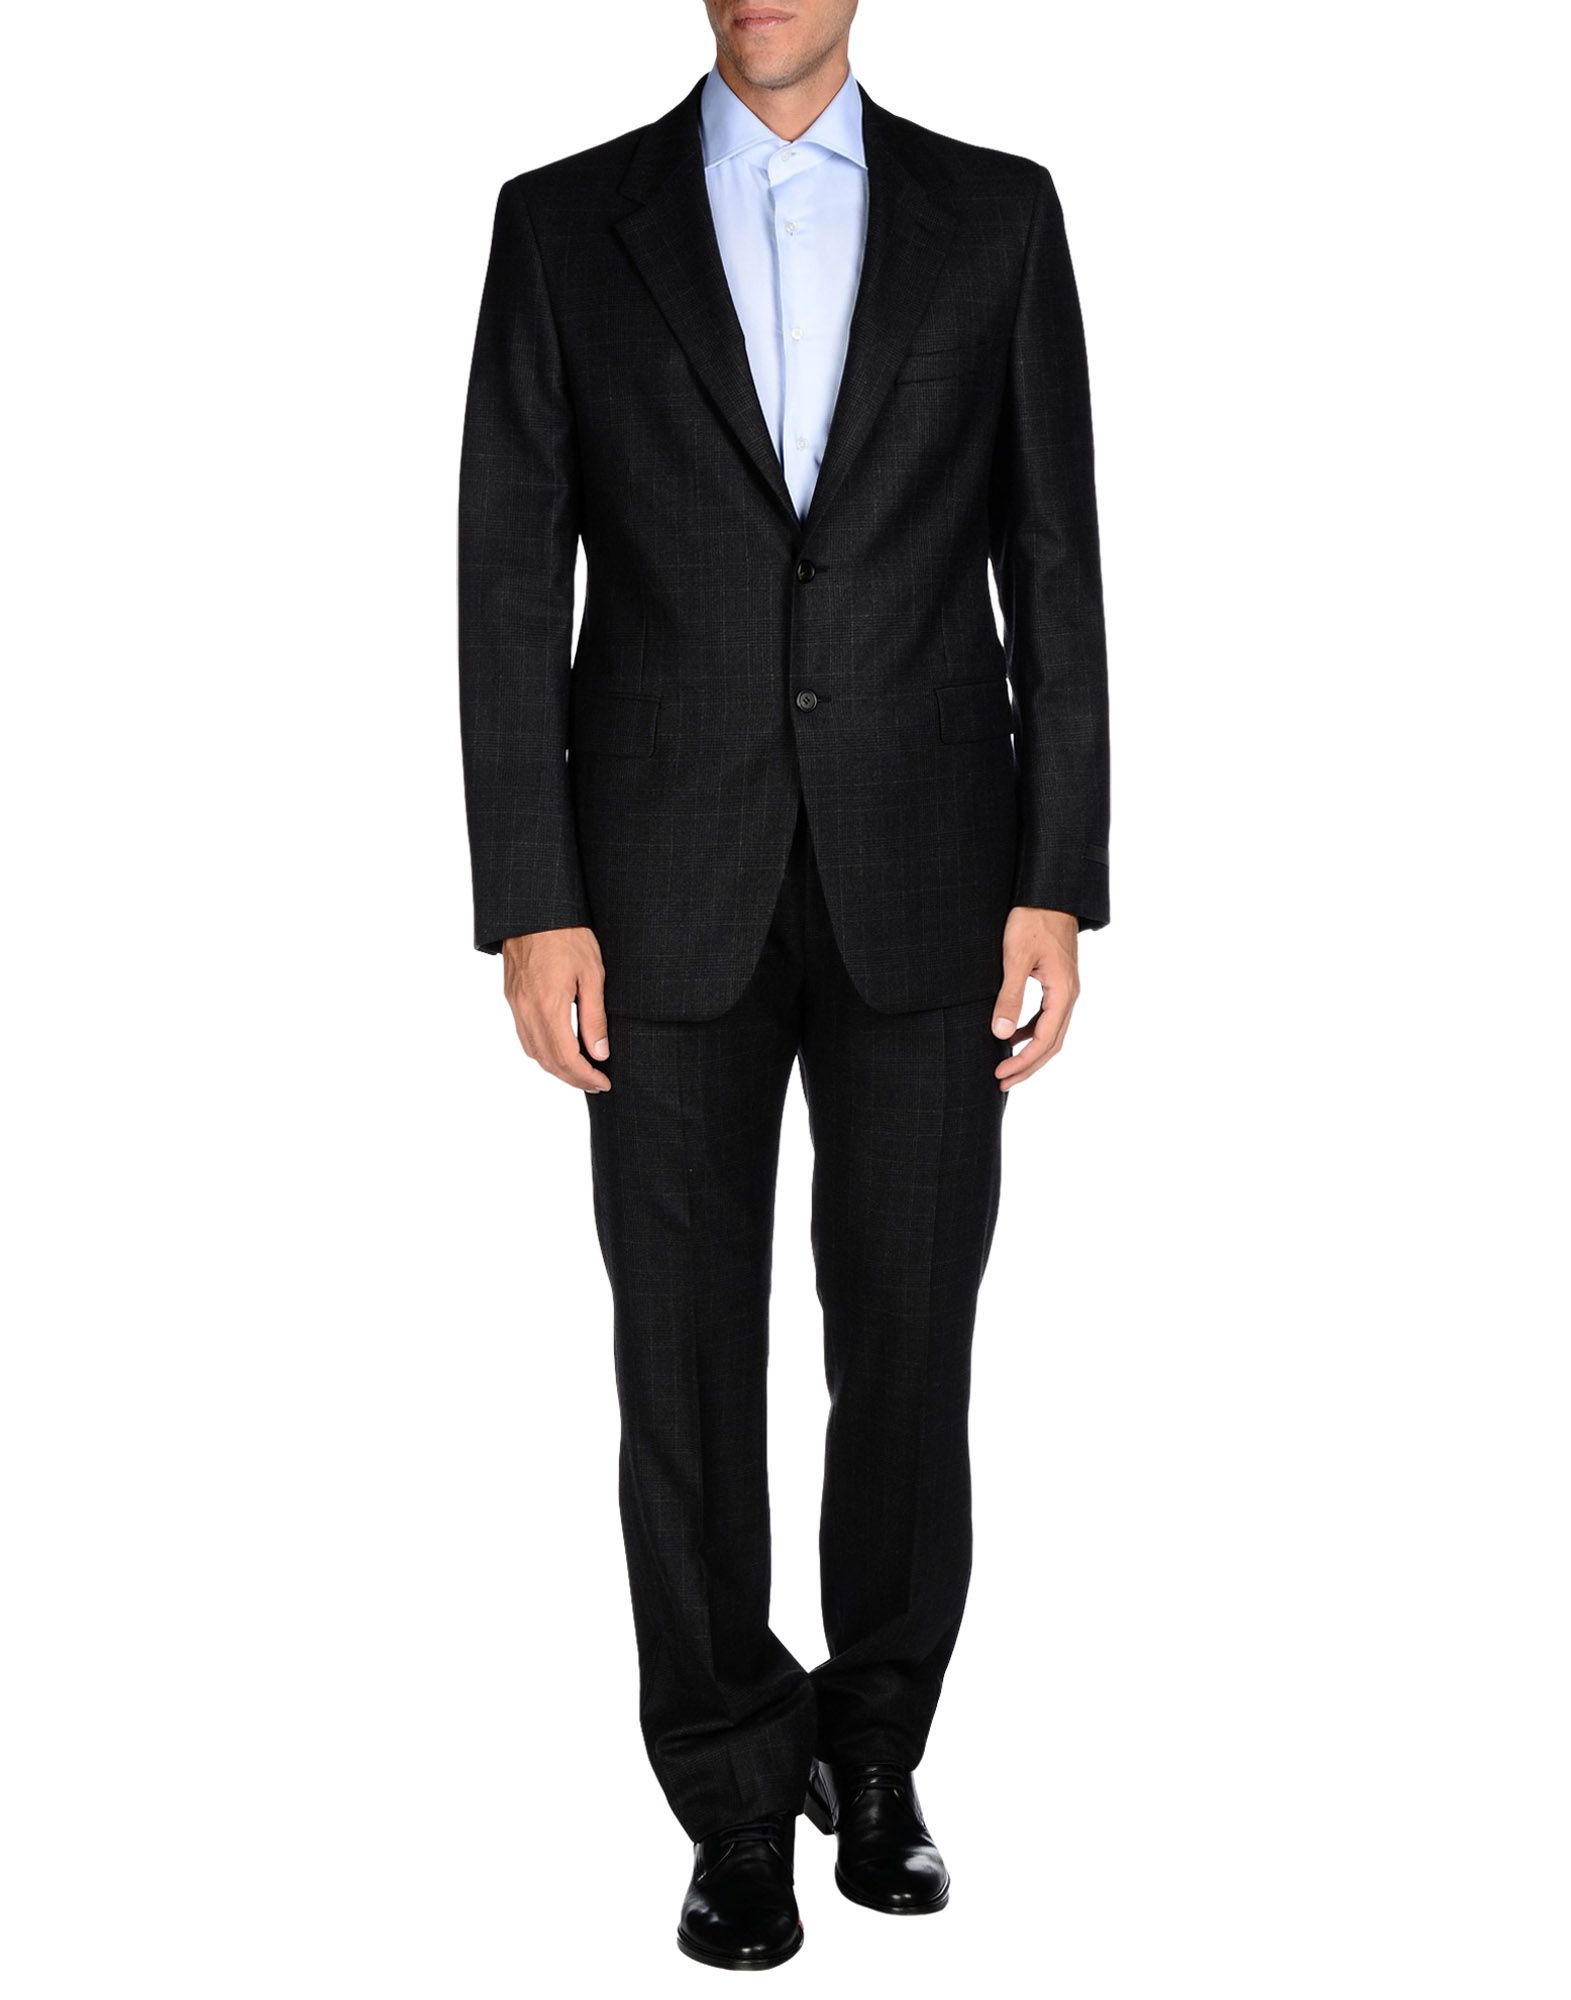 Lyst - Prada Suit in Gray for Men